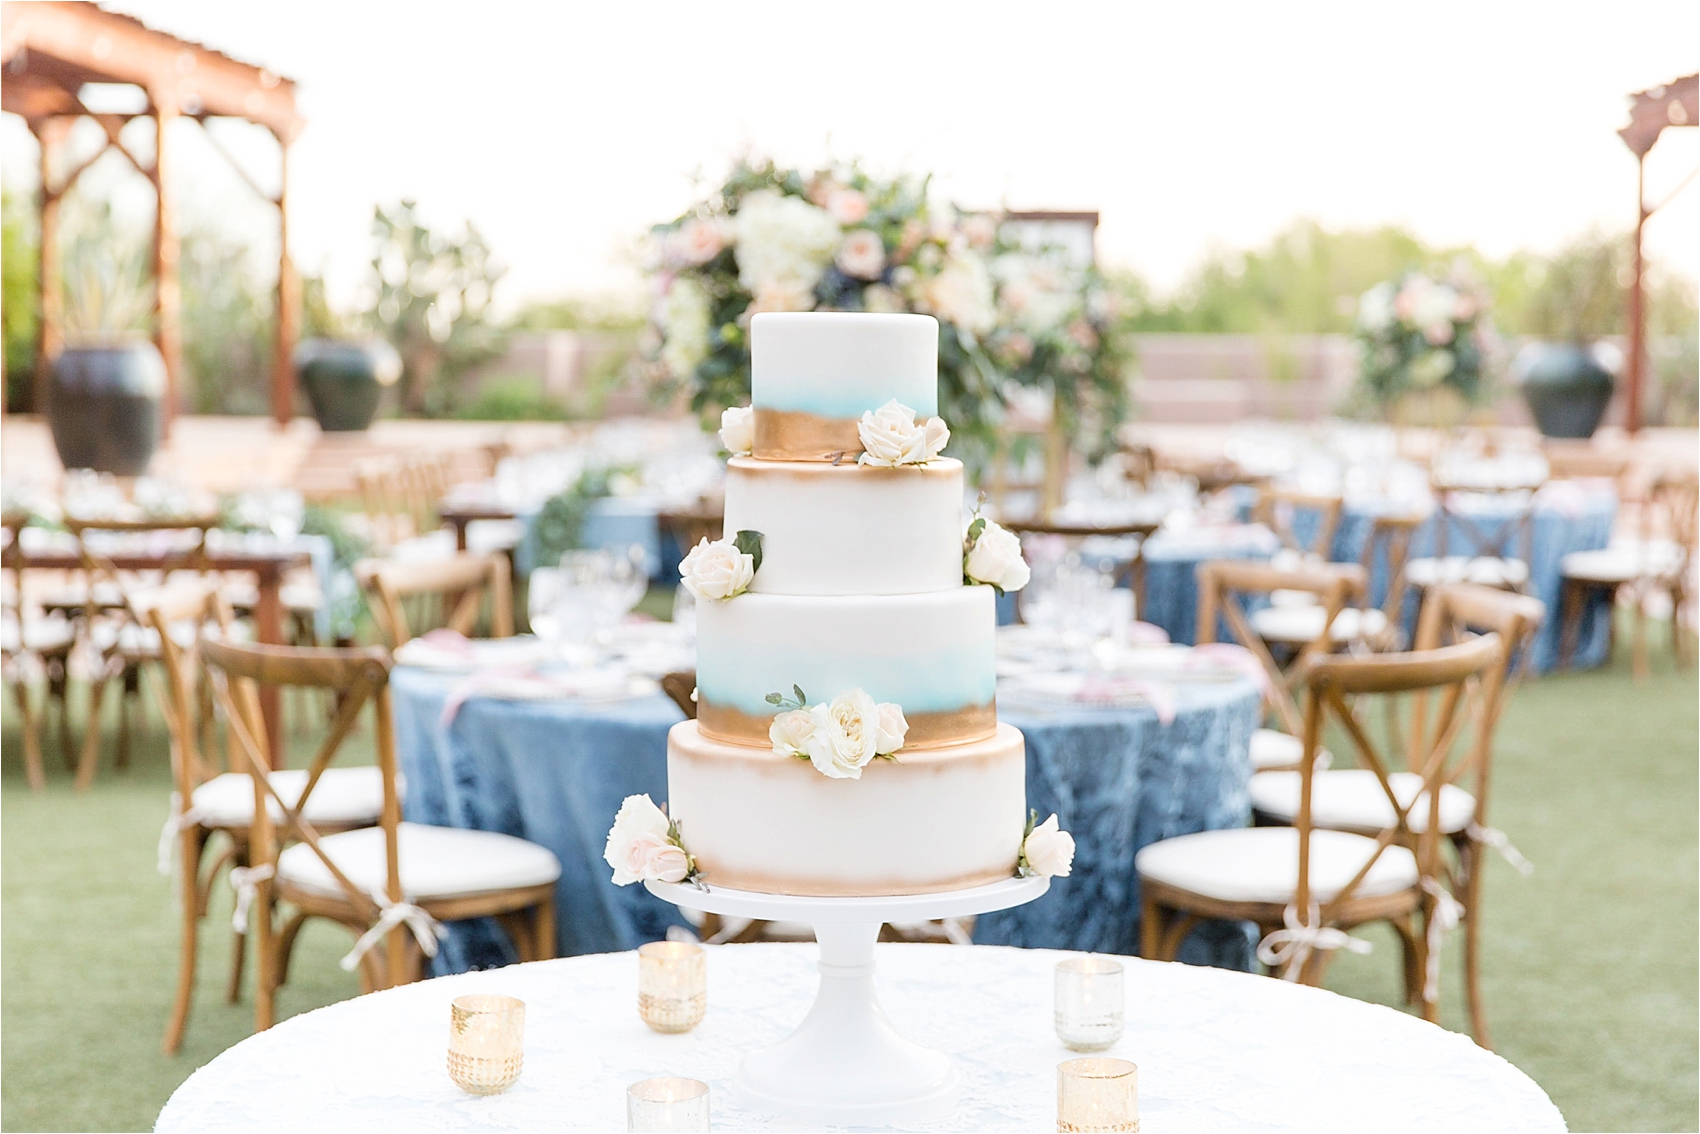 Four Seasons Scottsdale Wedding Reception in Arizona Wedding Cake